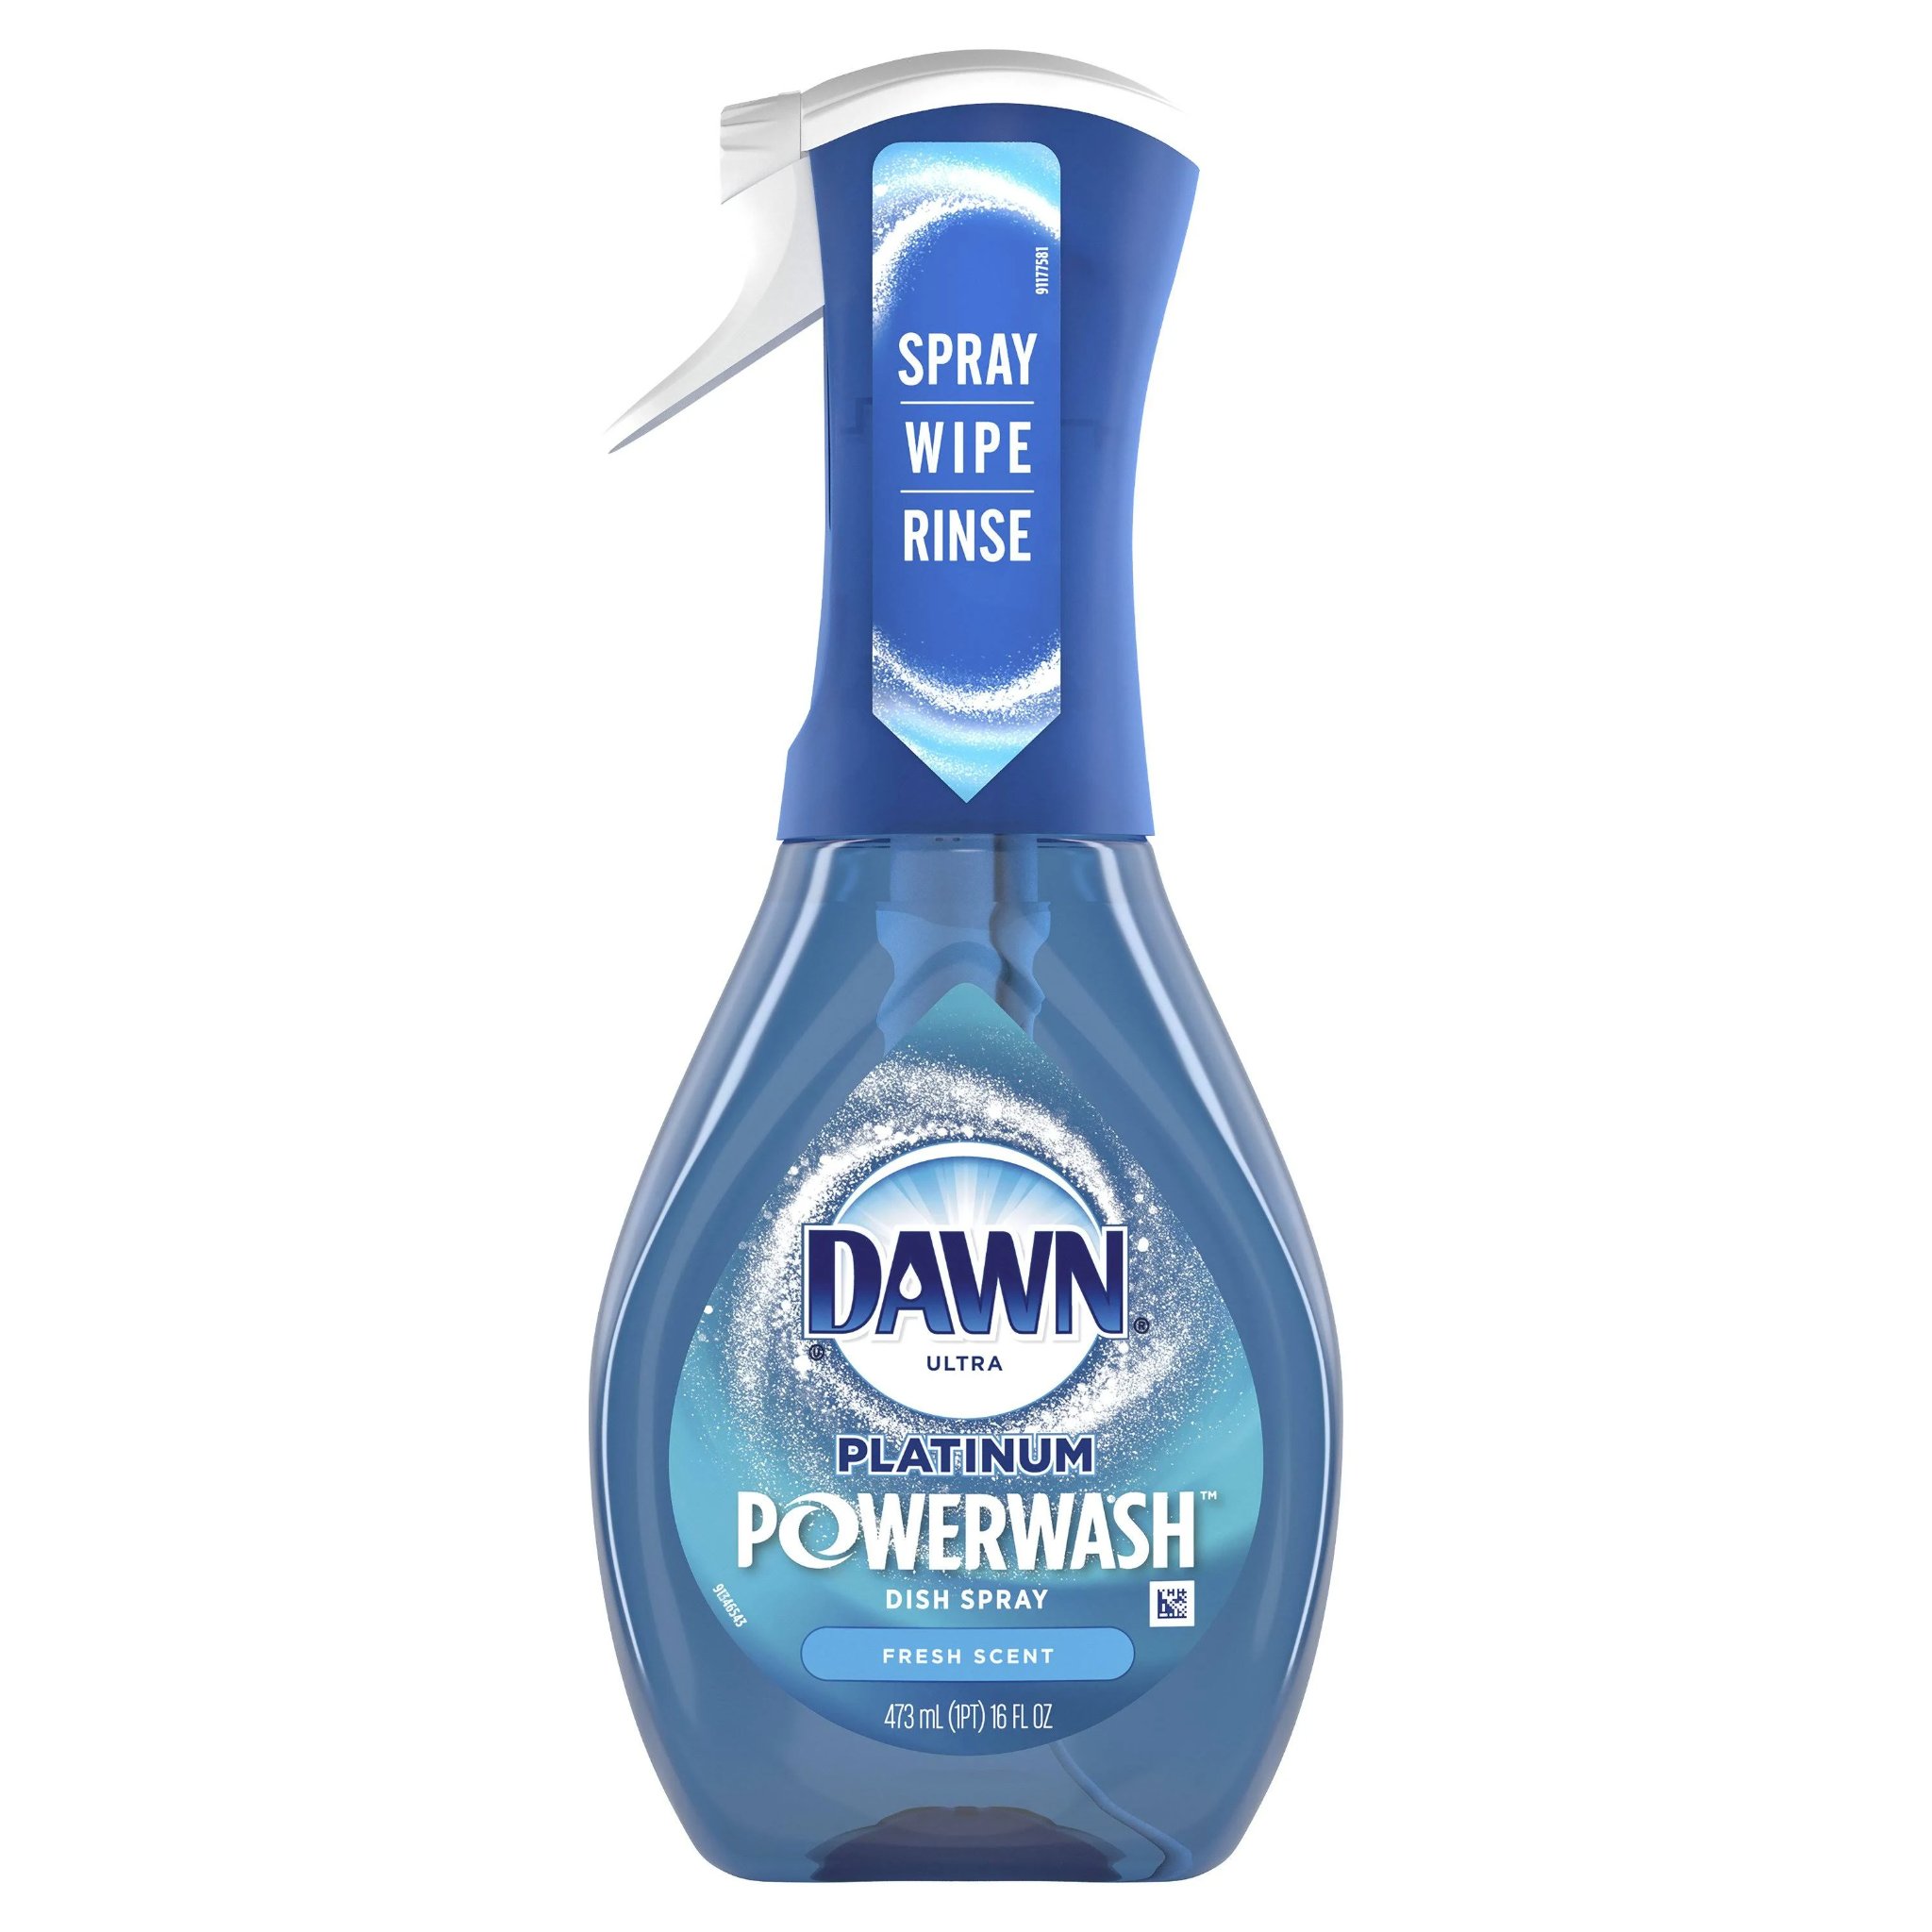 Dawn Ultra Platinum Powerwash Dish Spray